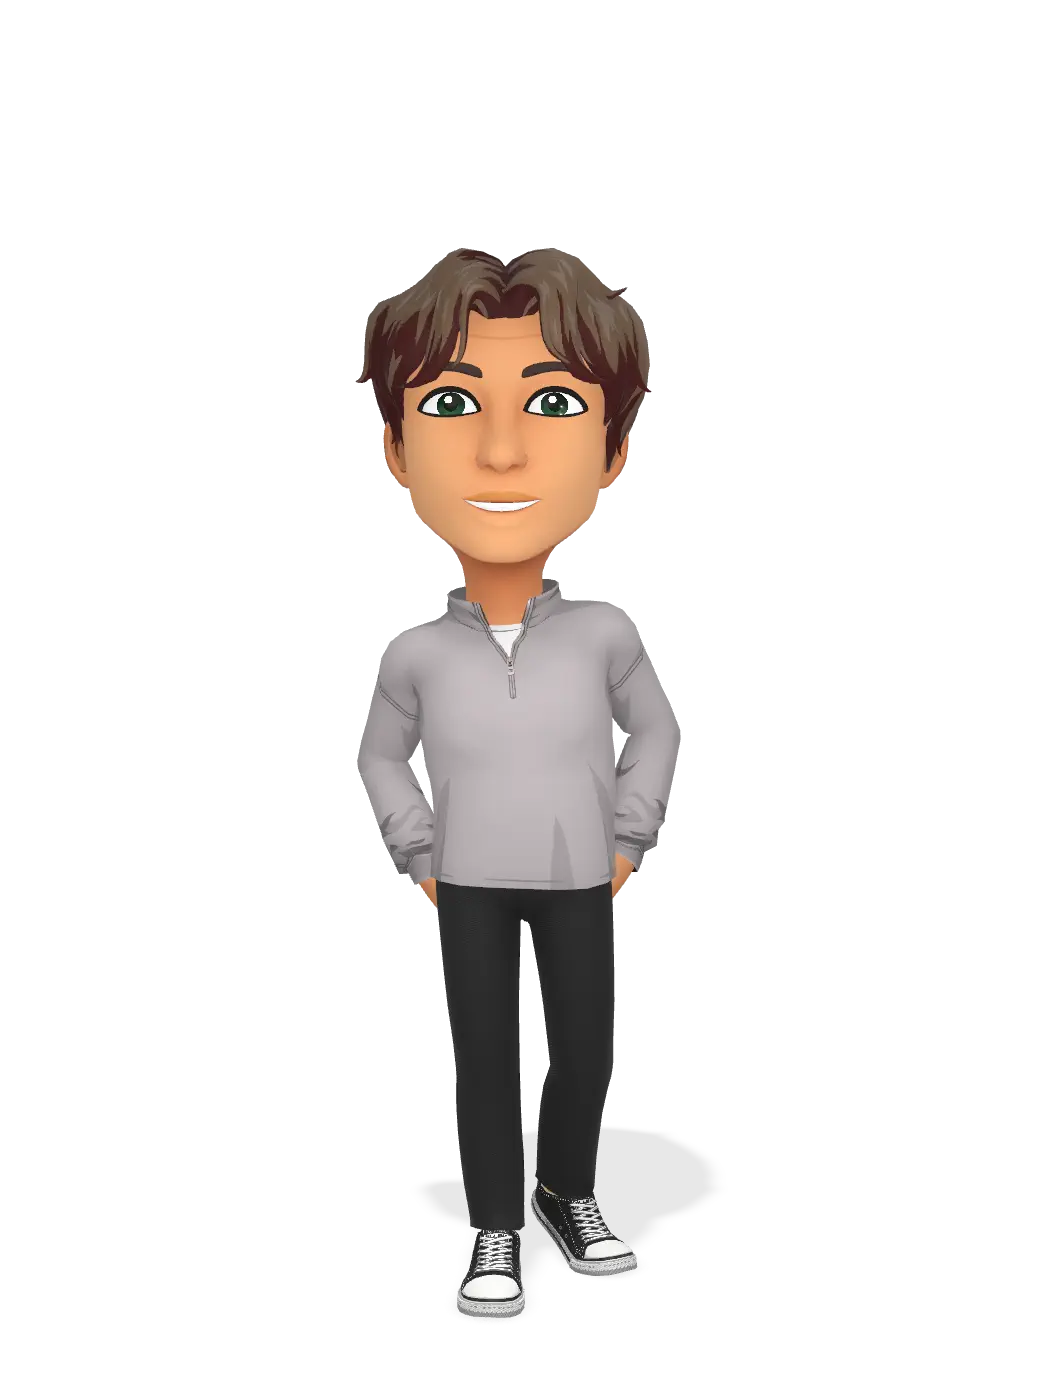 3D Bitmoji for axelholmen avatar